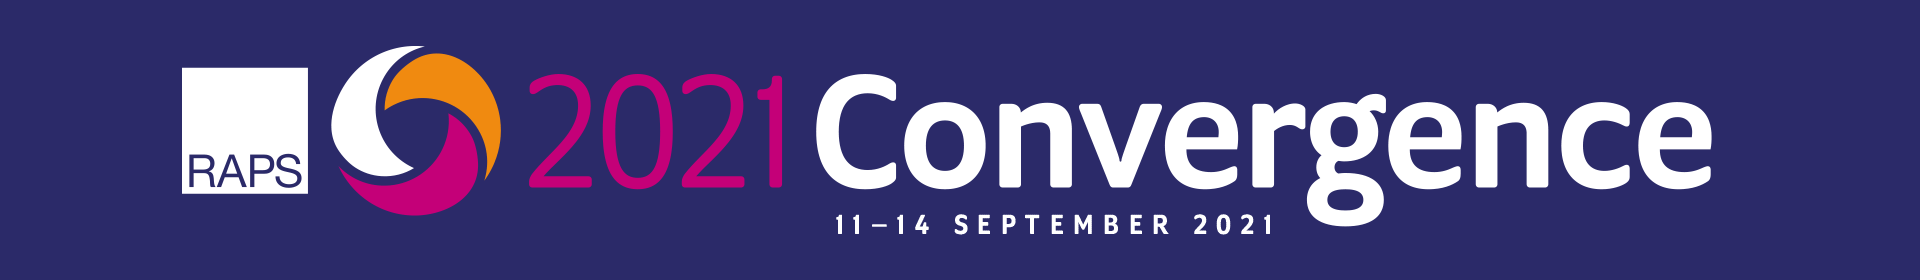 RAPS Convergence 2021 Event Banner